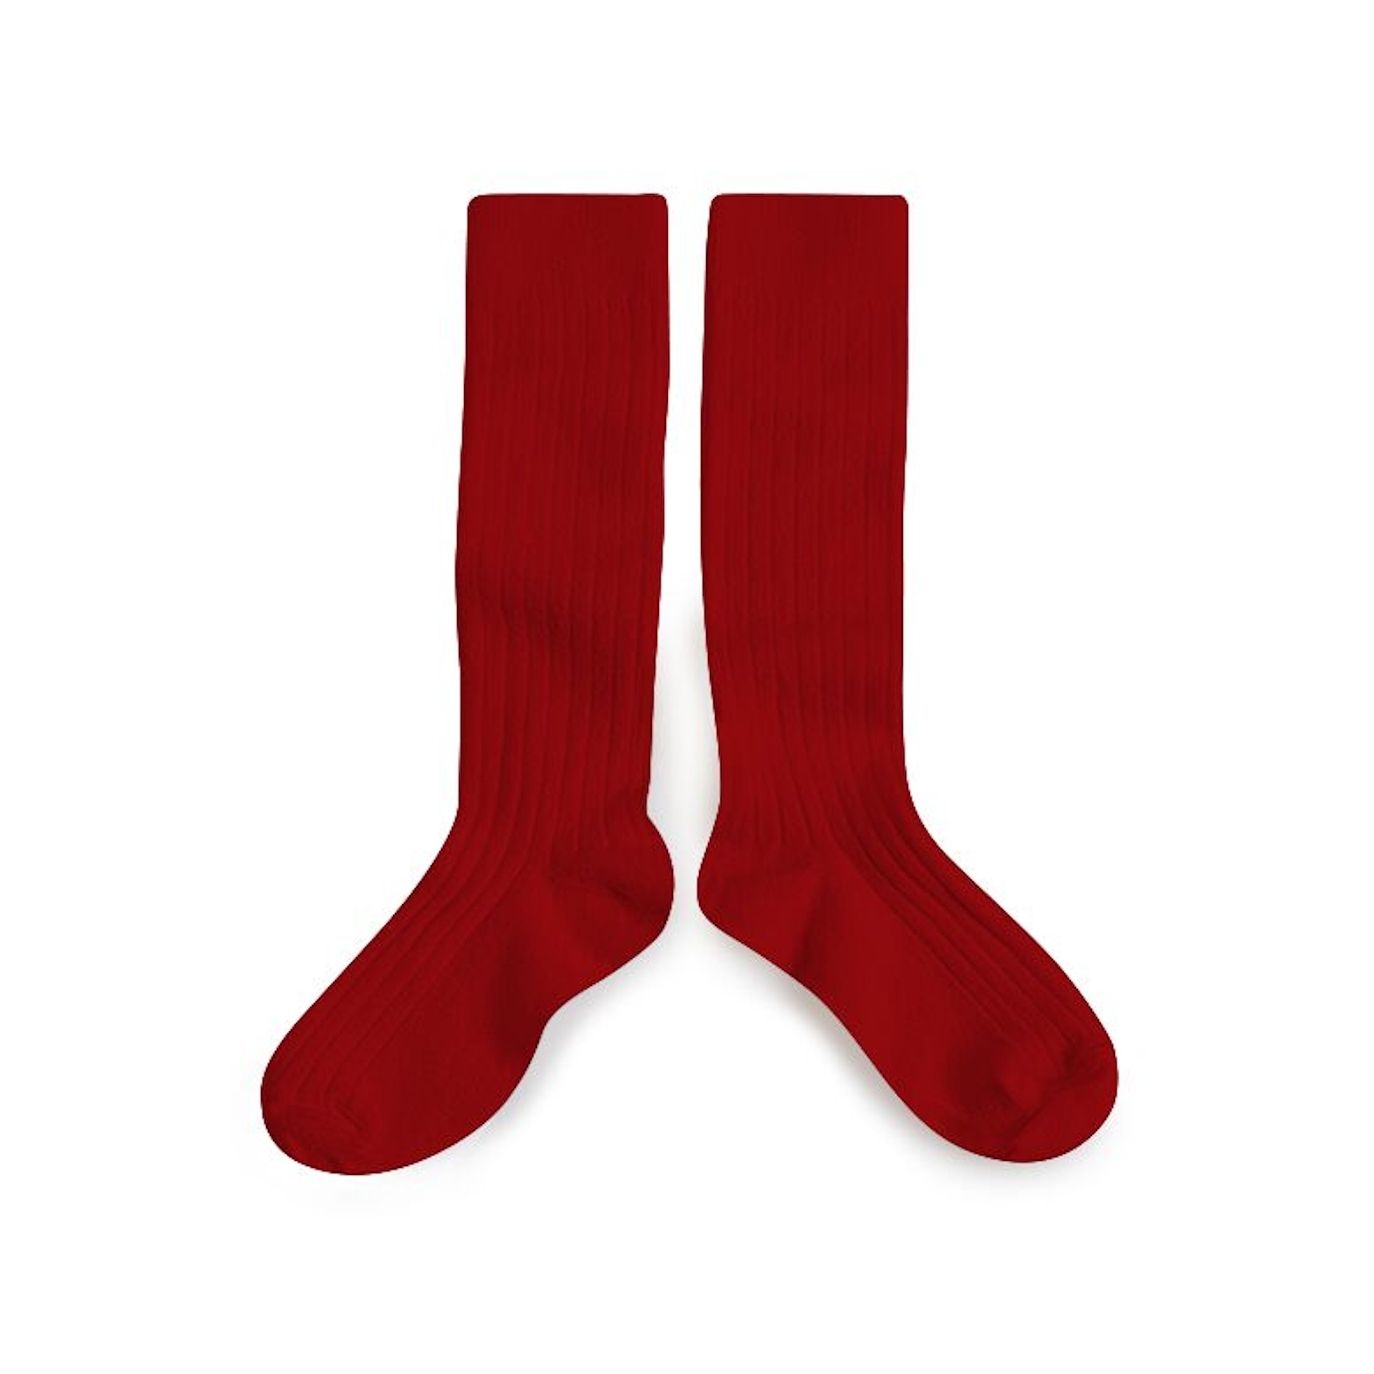 Collégien Knee high socks La Haute rouge carmin 2950 273 La Haute 